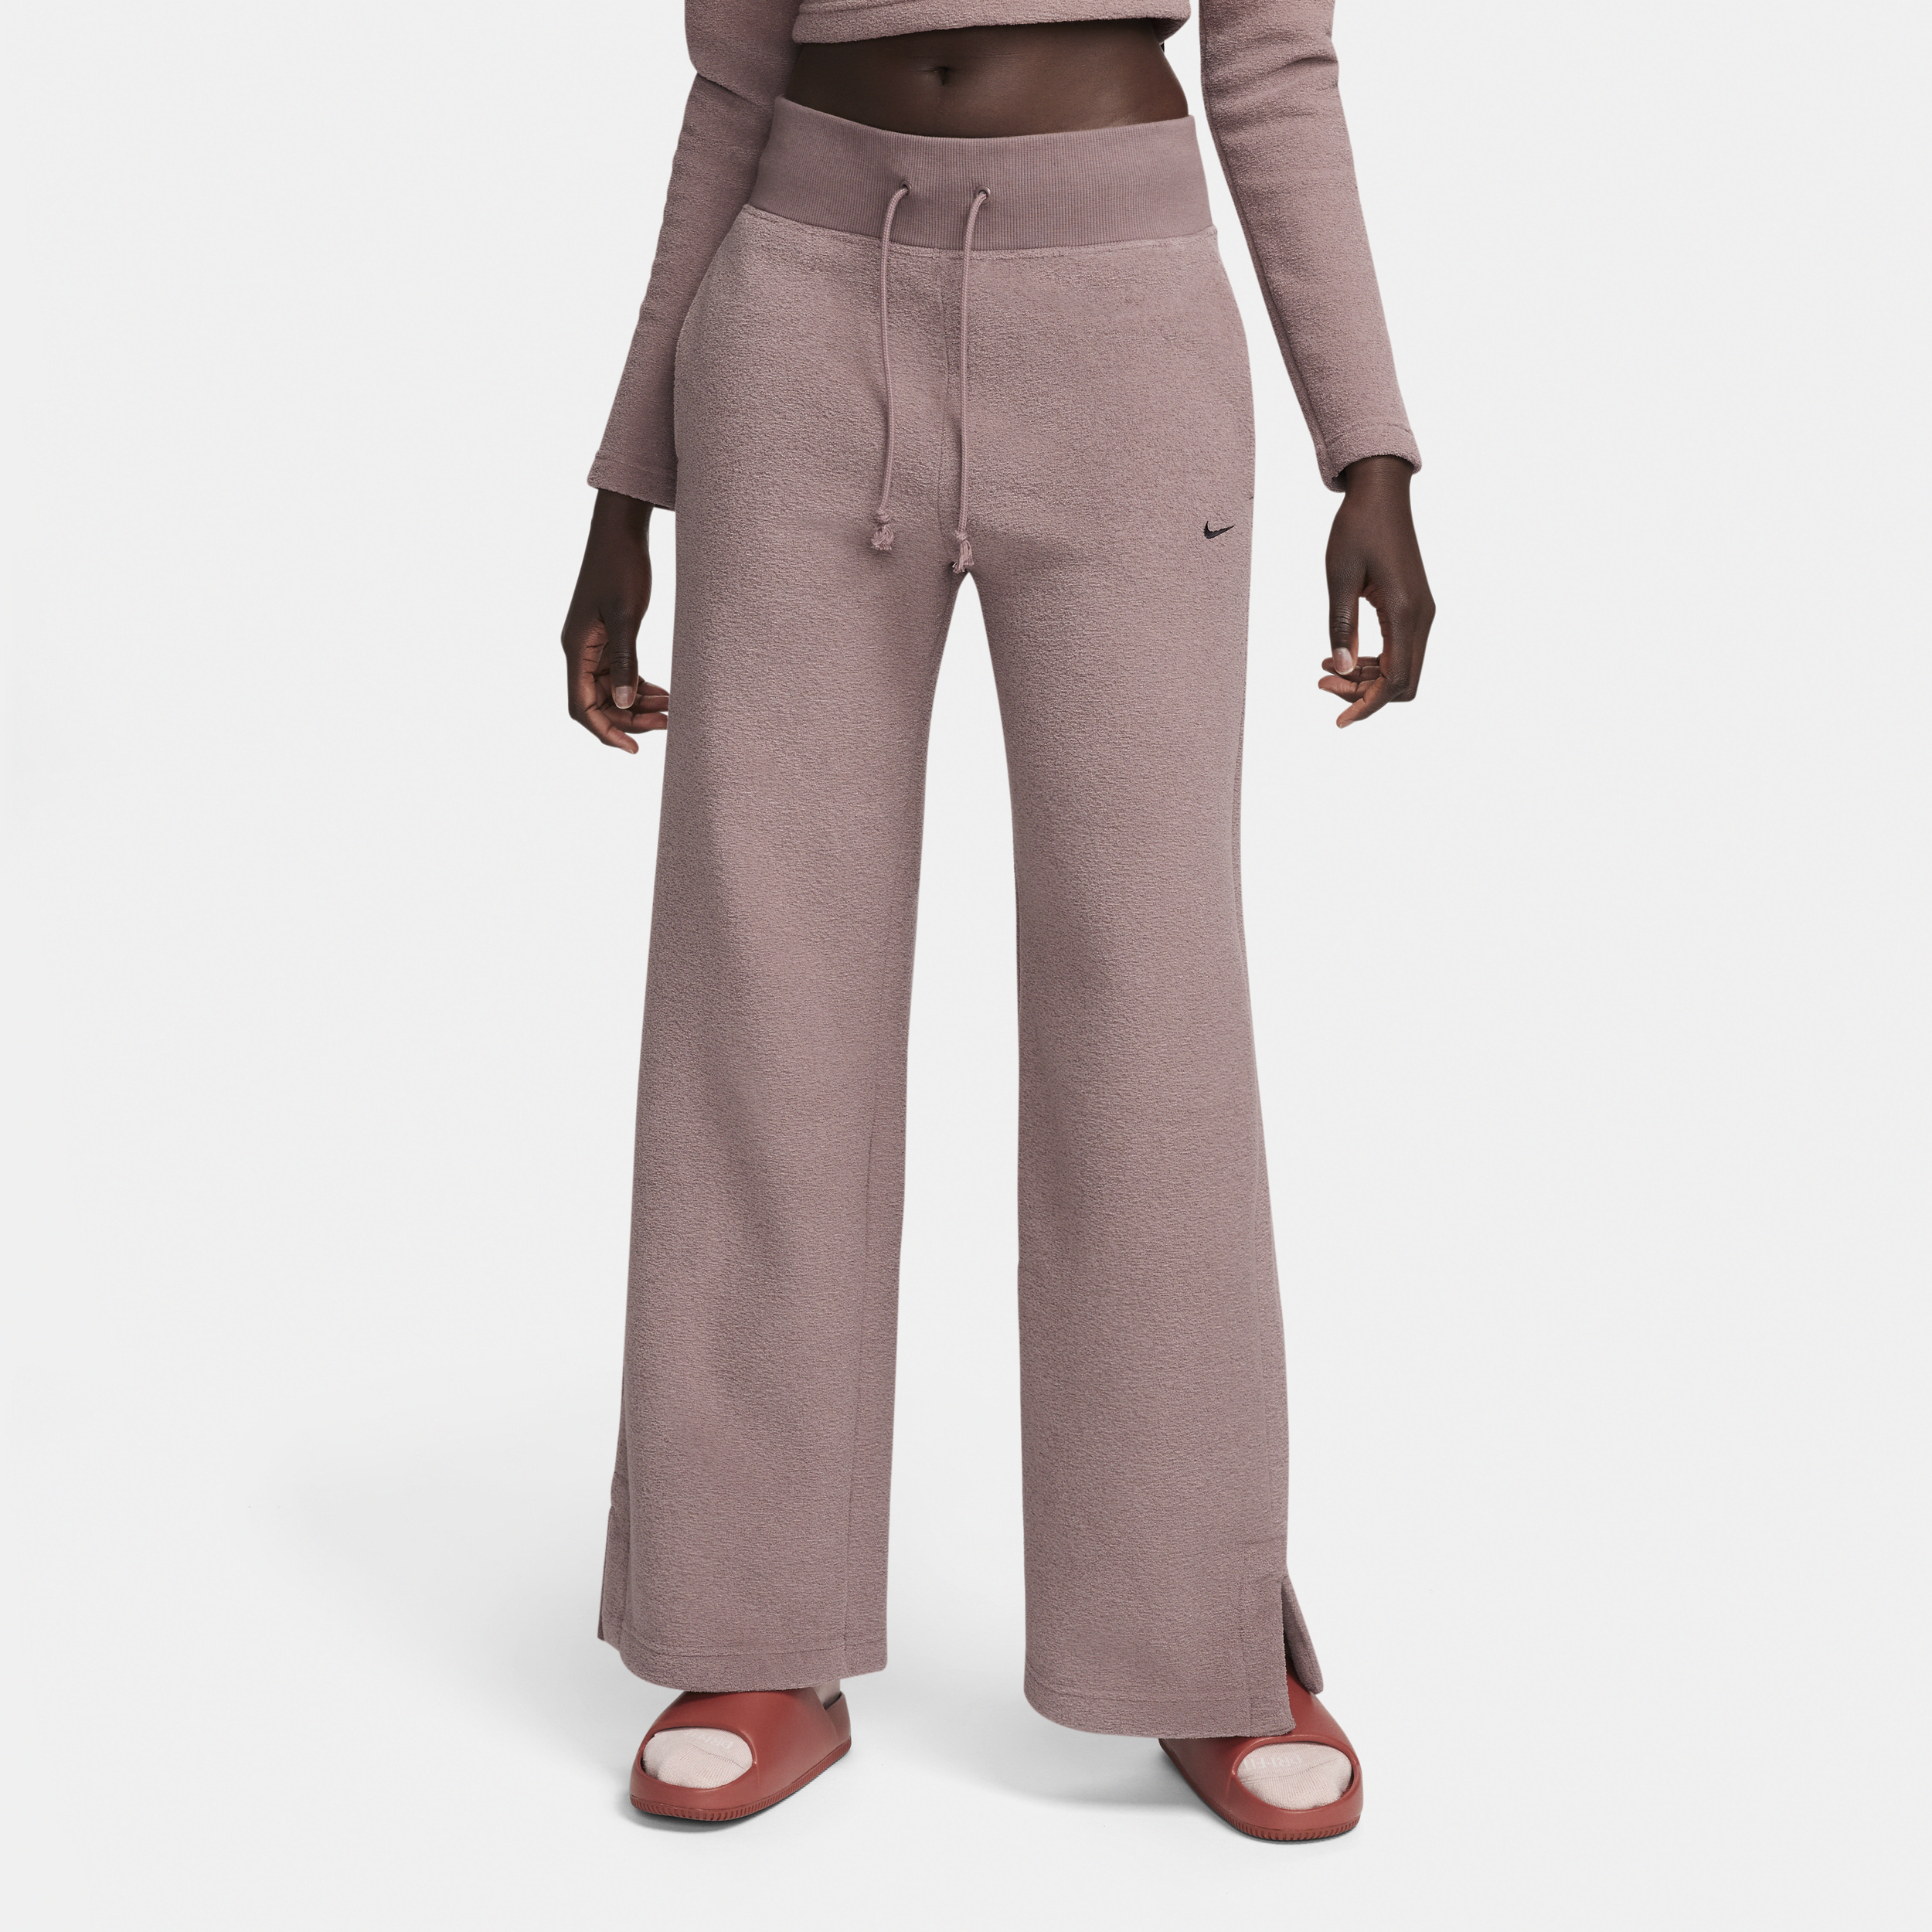 Nike Sportswear Phoenix Plush Pantalón de talle alto y tejido Fleece cálido con pierna ancha - Mujer - Morado